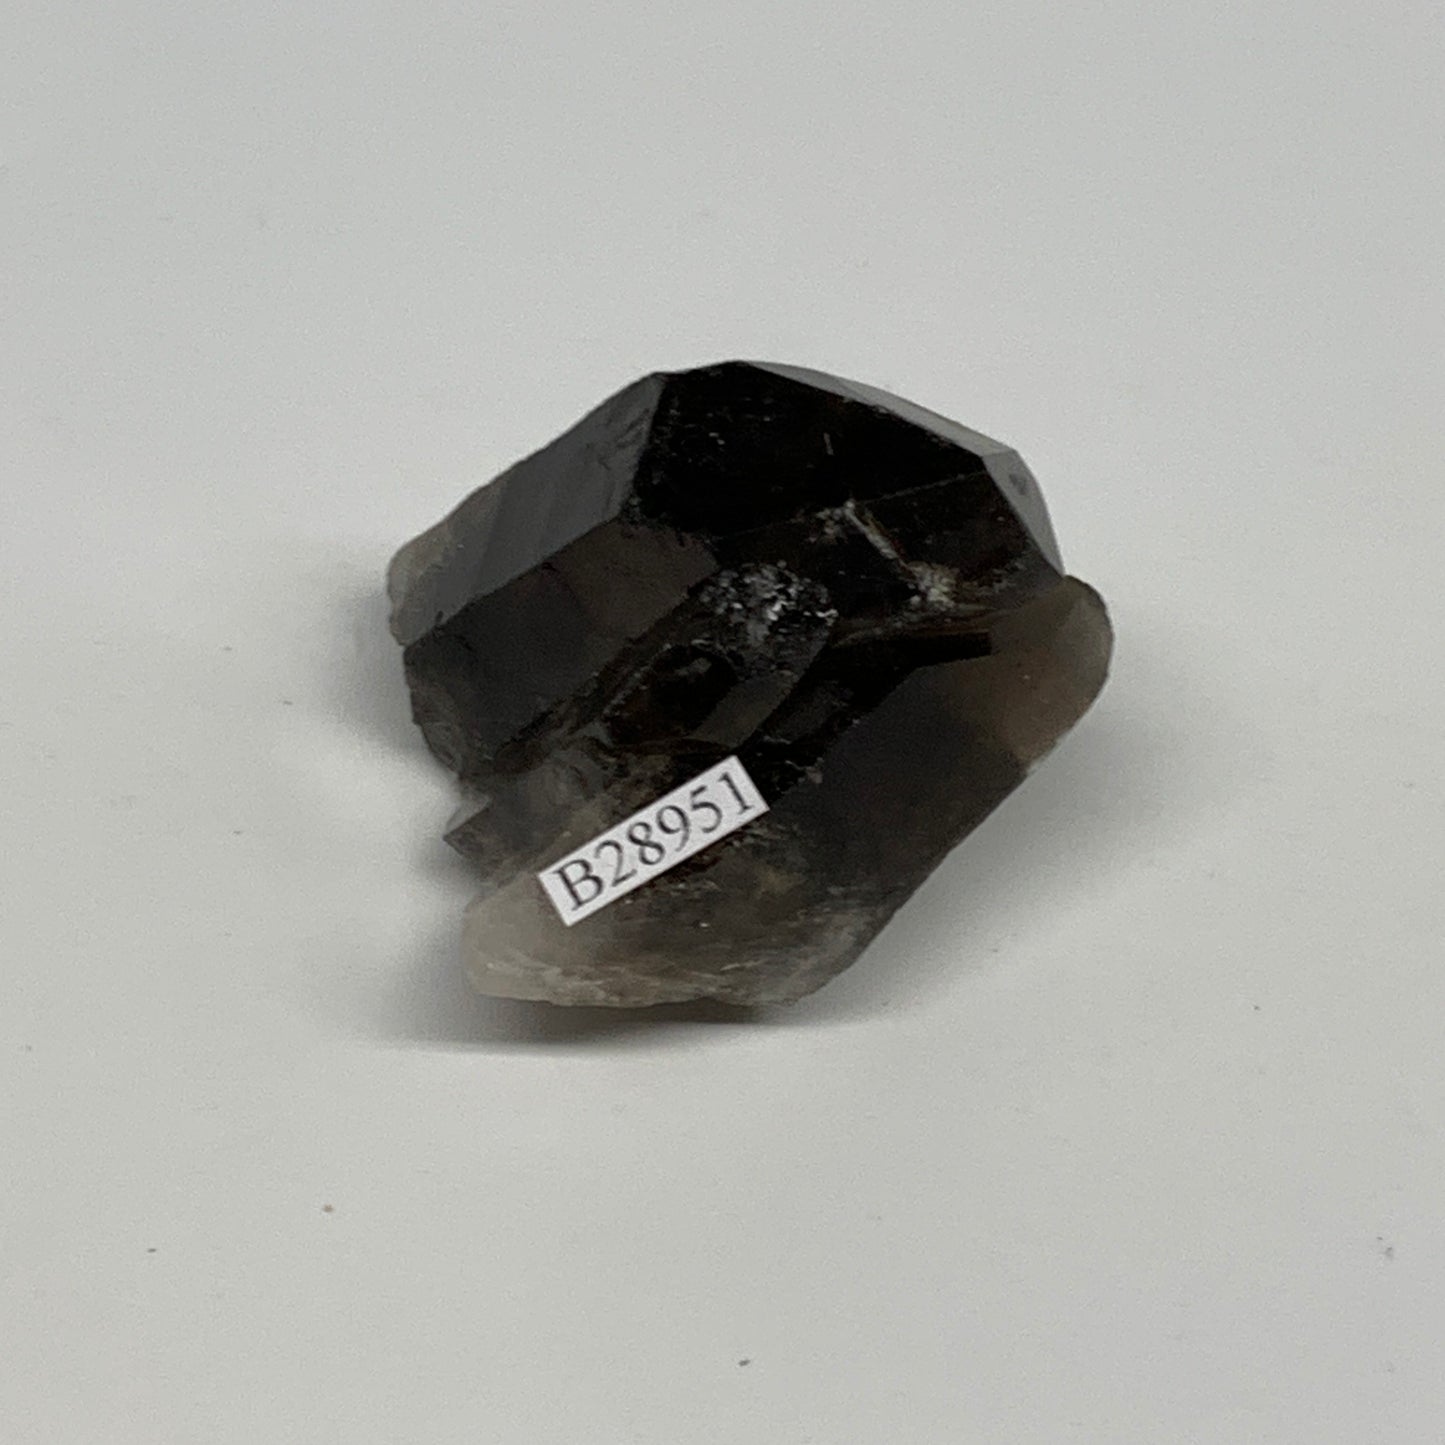 67.8g,2.2"x1.9"x1.5",Smoky Quartz Crystal Mineral,Specimen Terminated,B28951